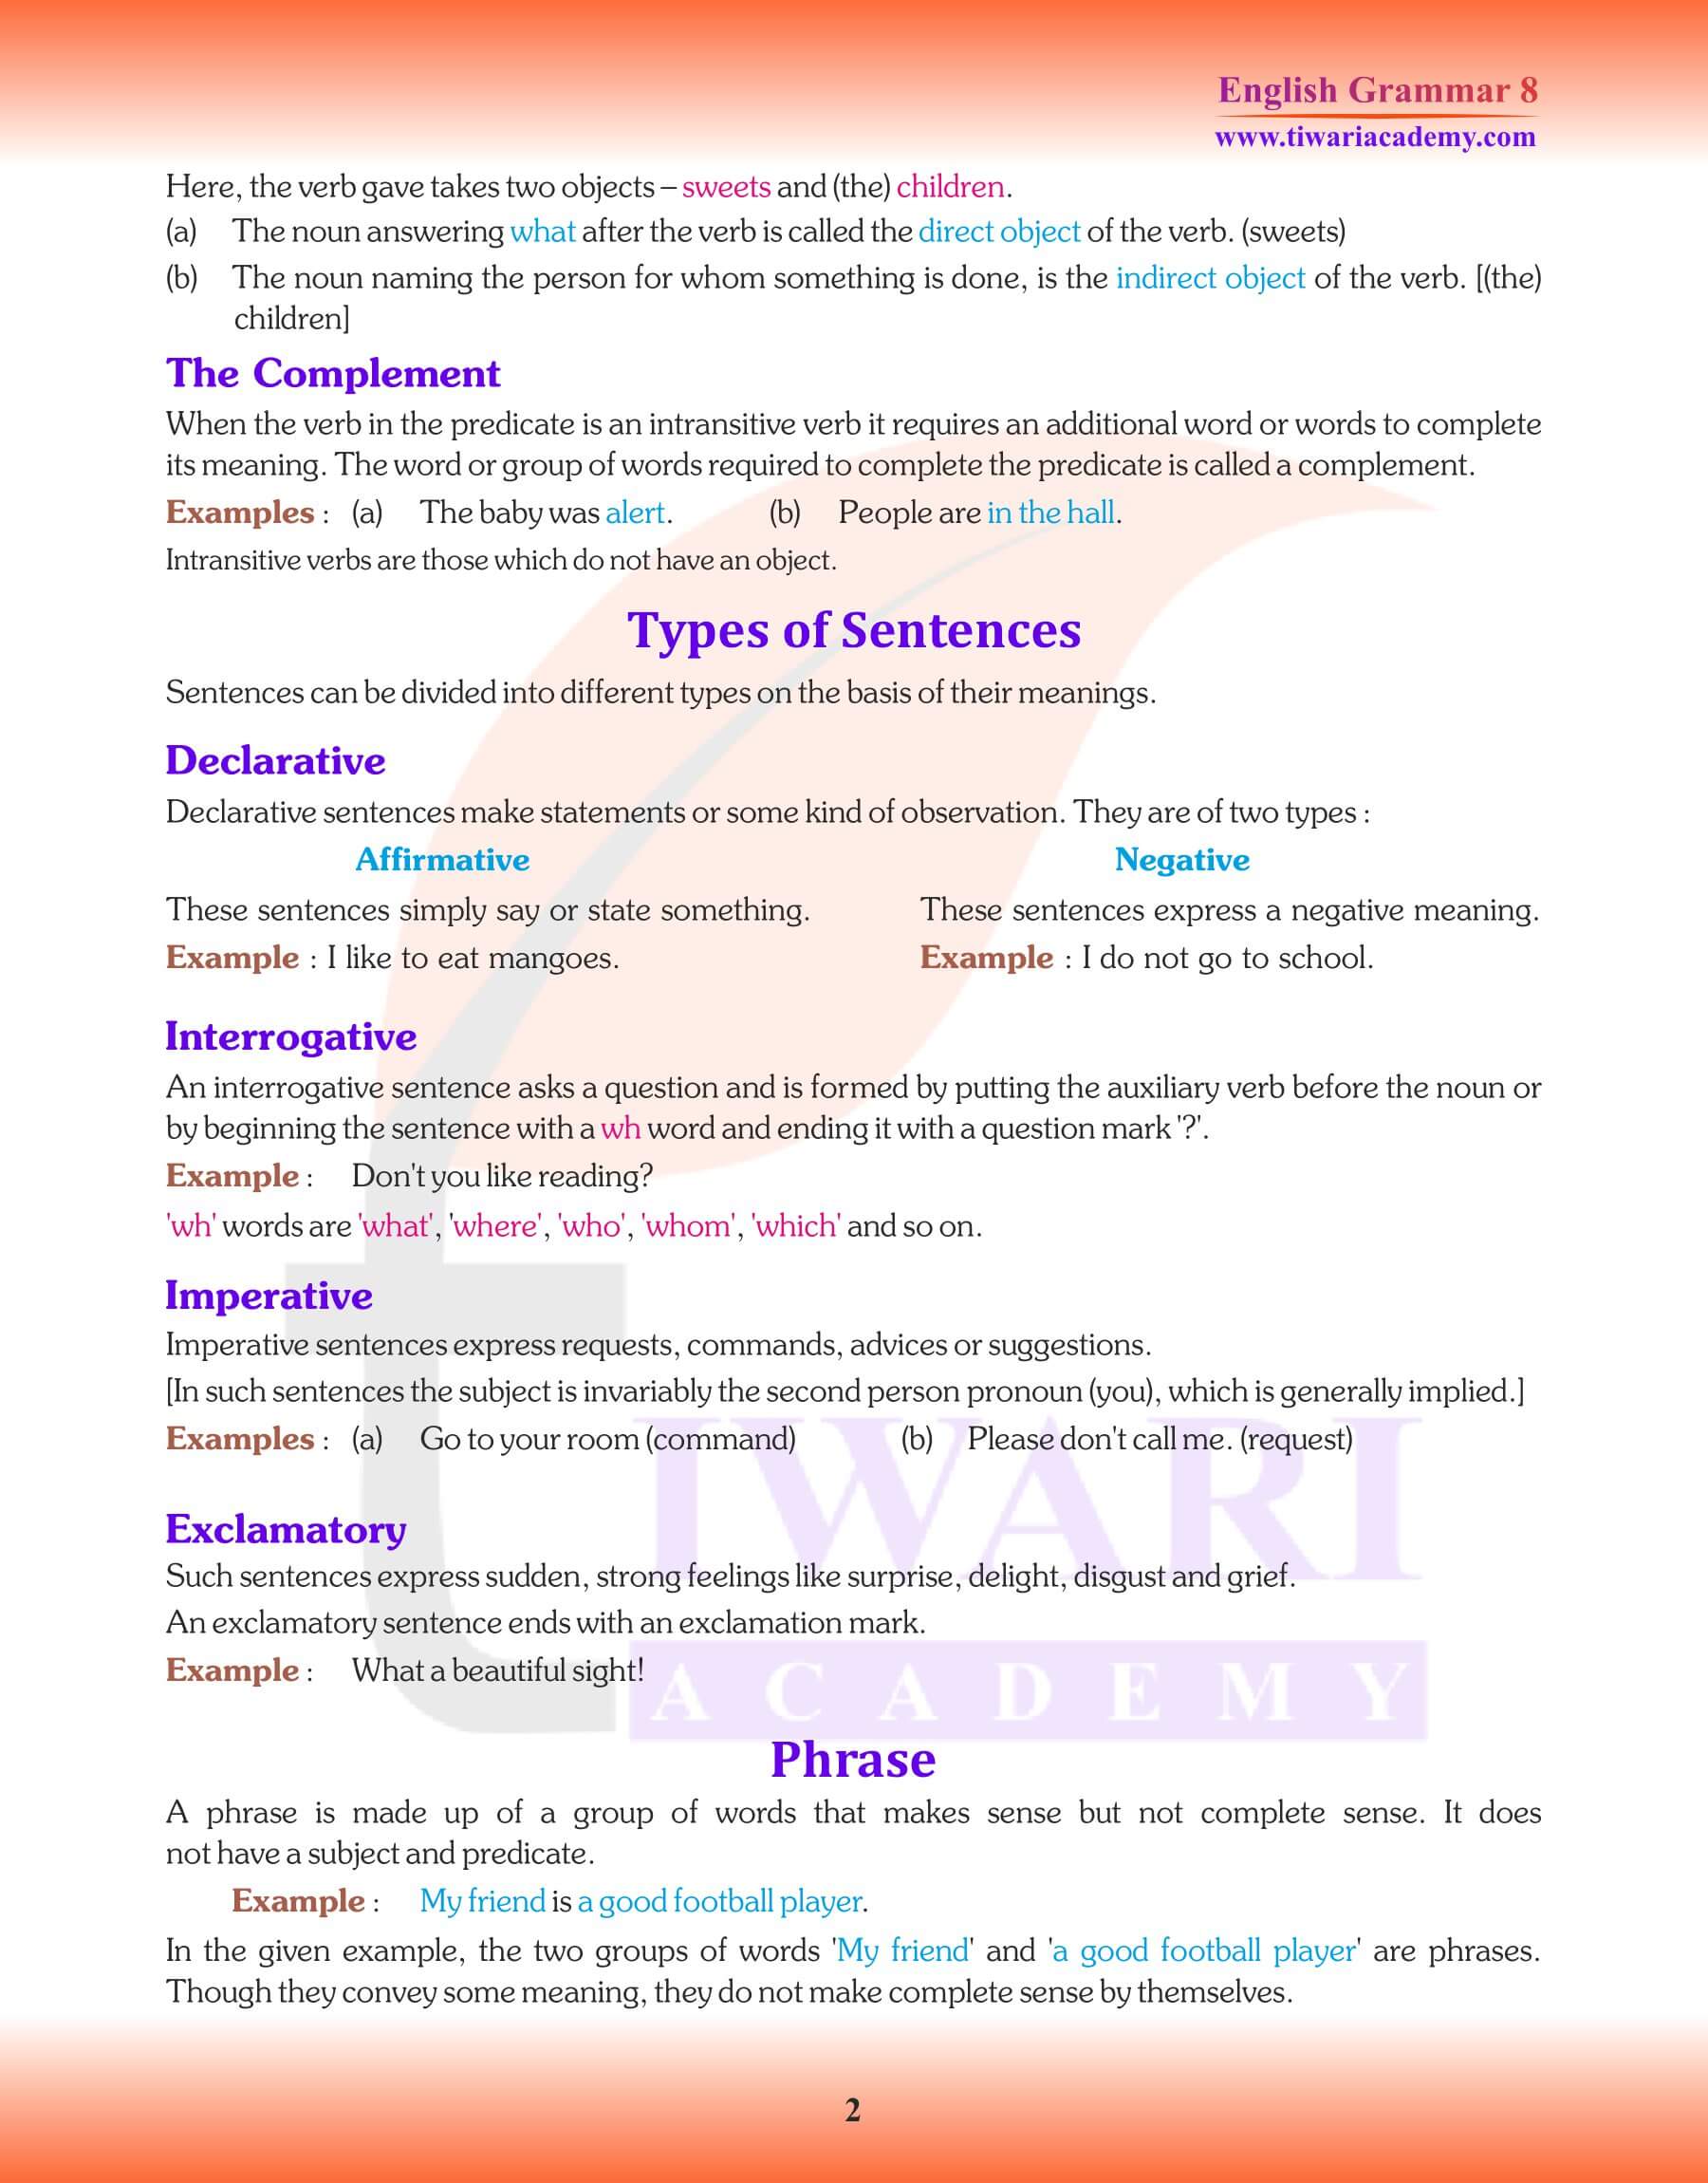 Class 8 English Grammar Chapter 1 The Sentence Study material